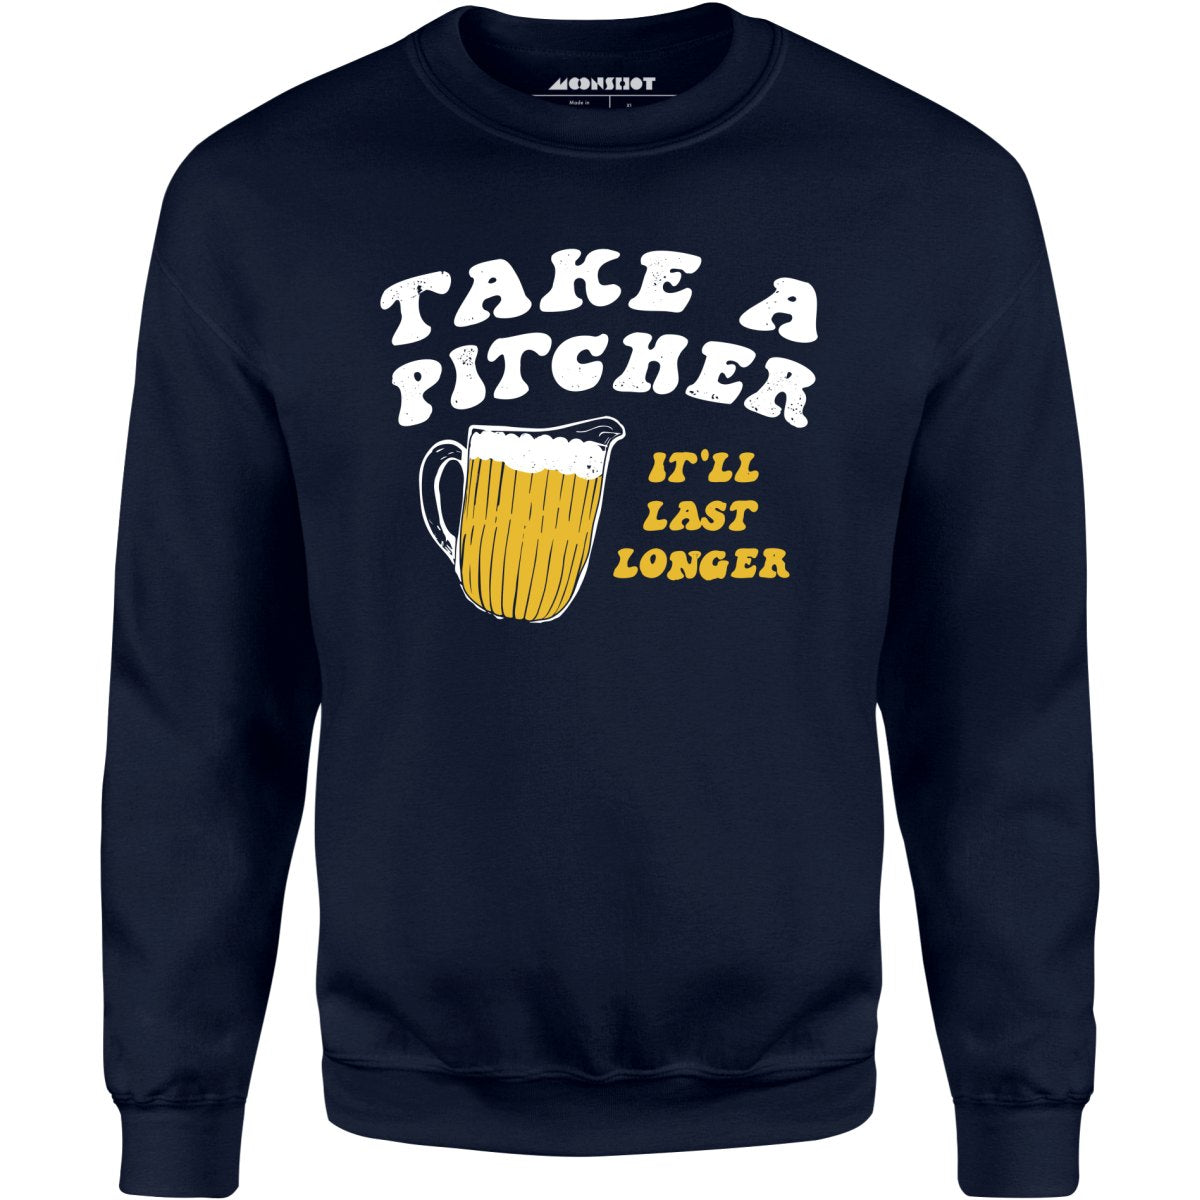 Take a Pitcher - Unisex Sweatshirt